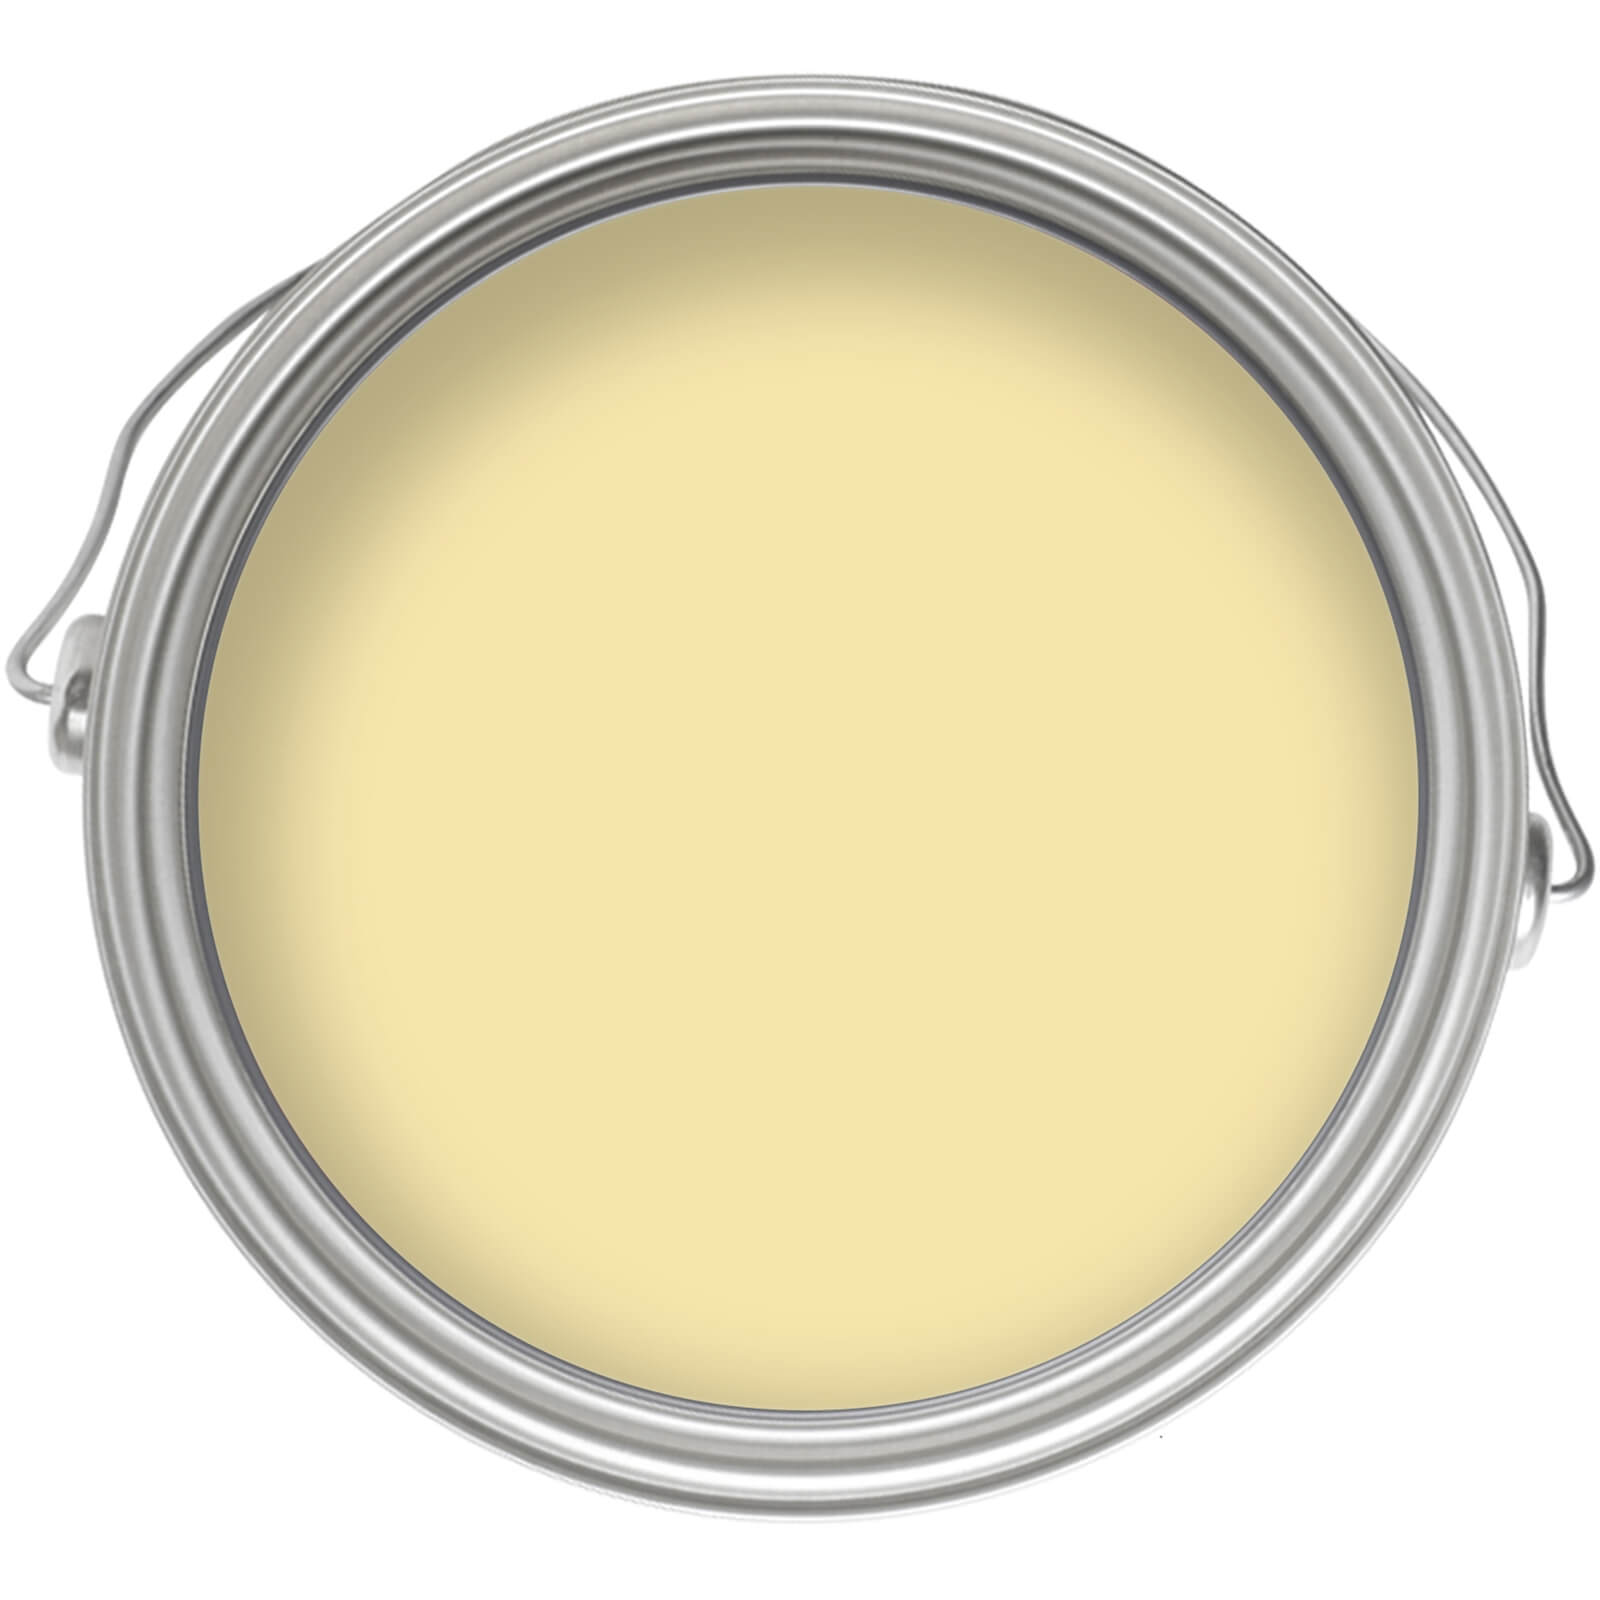 Homebase Kitchen Matt Paint - Lemon Souffle 2.5L